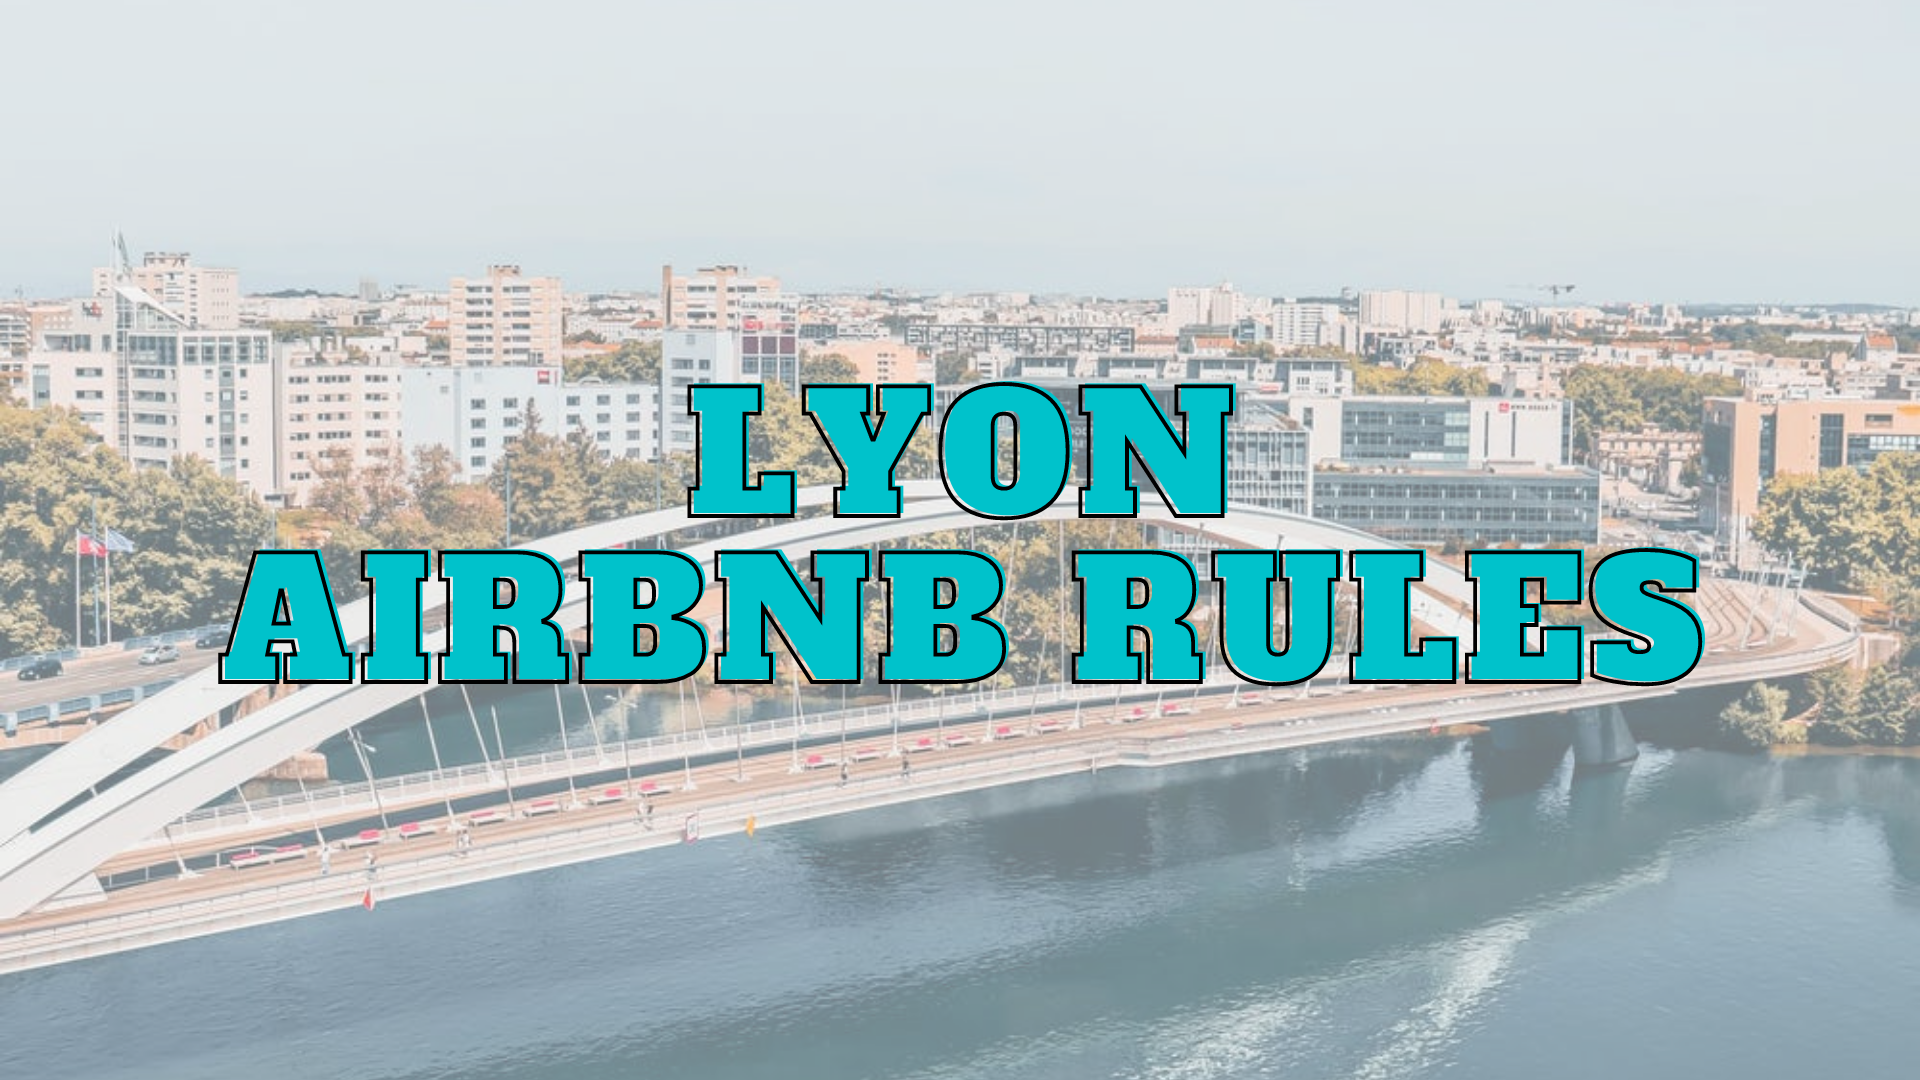 Lyon airbnb rules